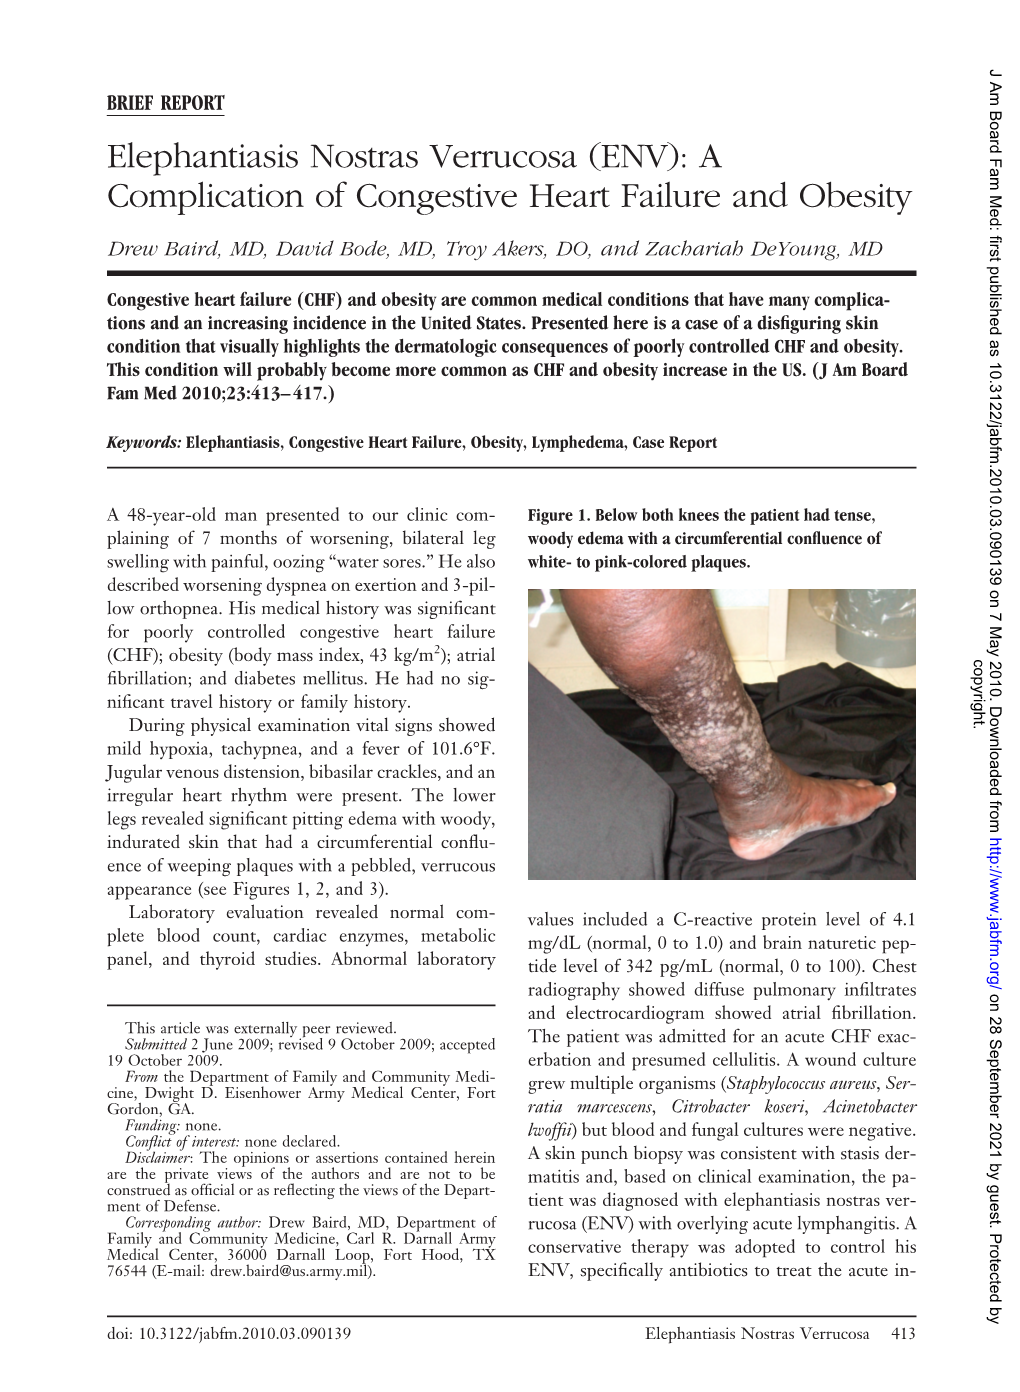 Elephantiasis Nostras Verrucosa (ENV): a Complication of Congestive Heart Failure and Obesity